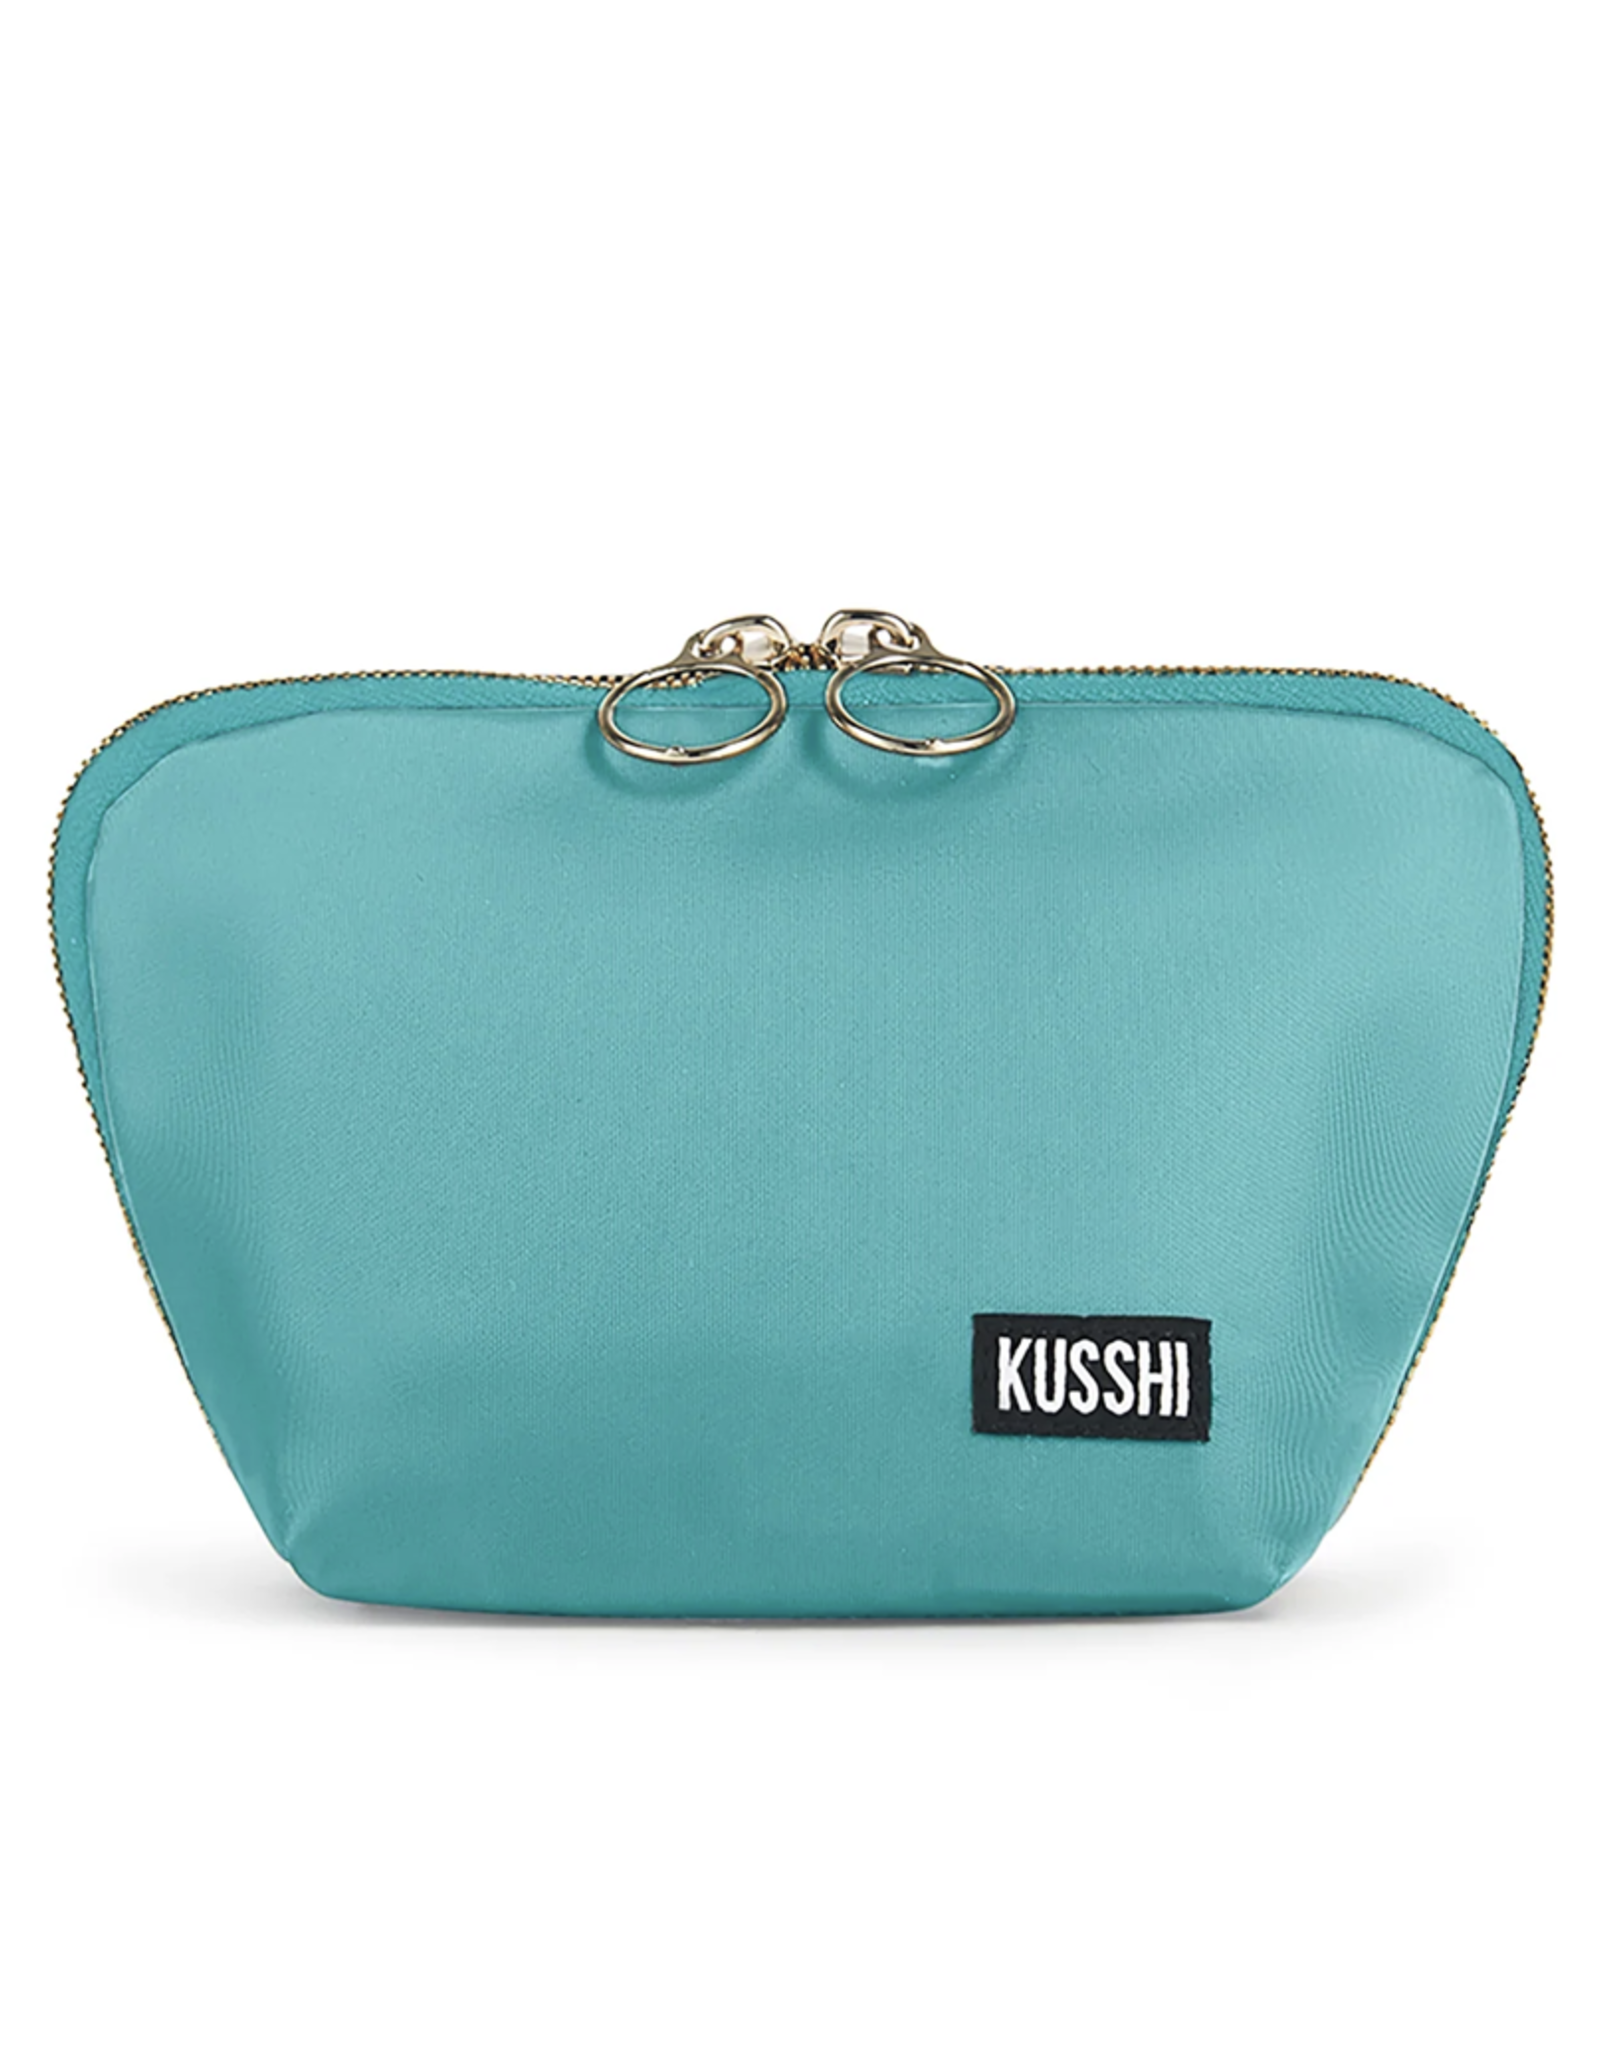 KUSSHI Kusshi Everyday Makeup Bag - Fabric